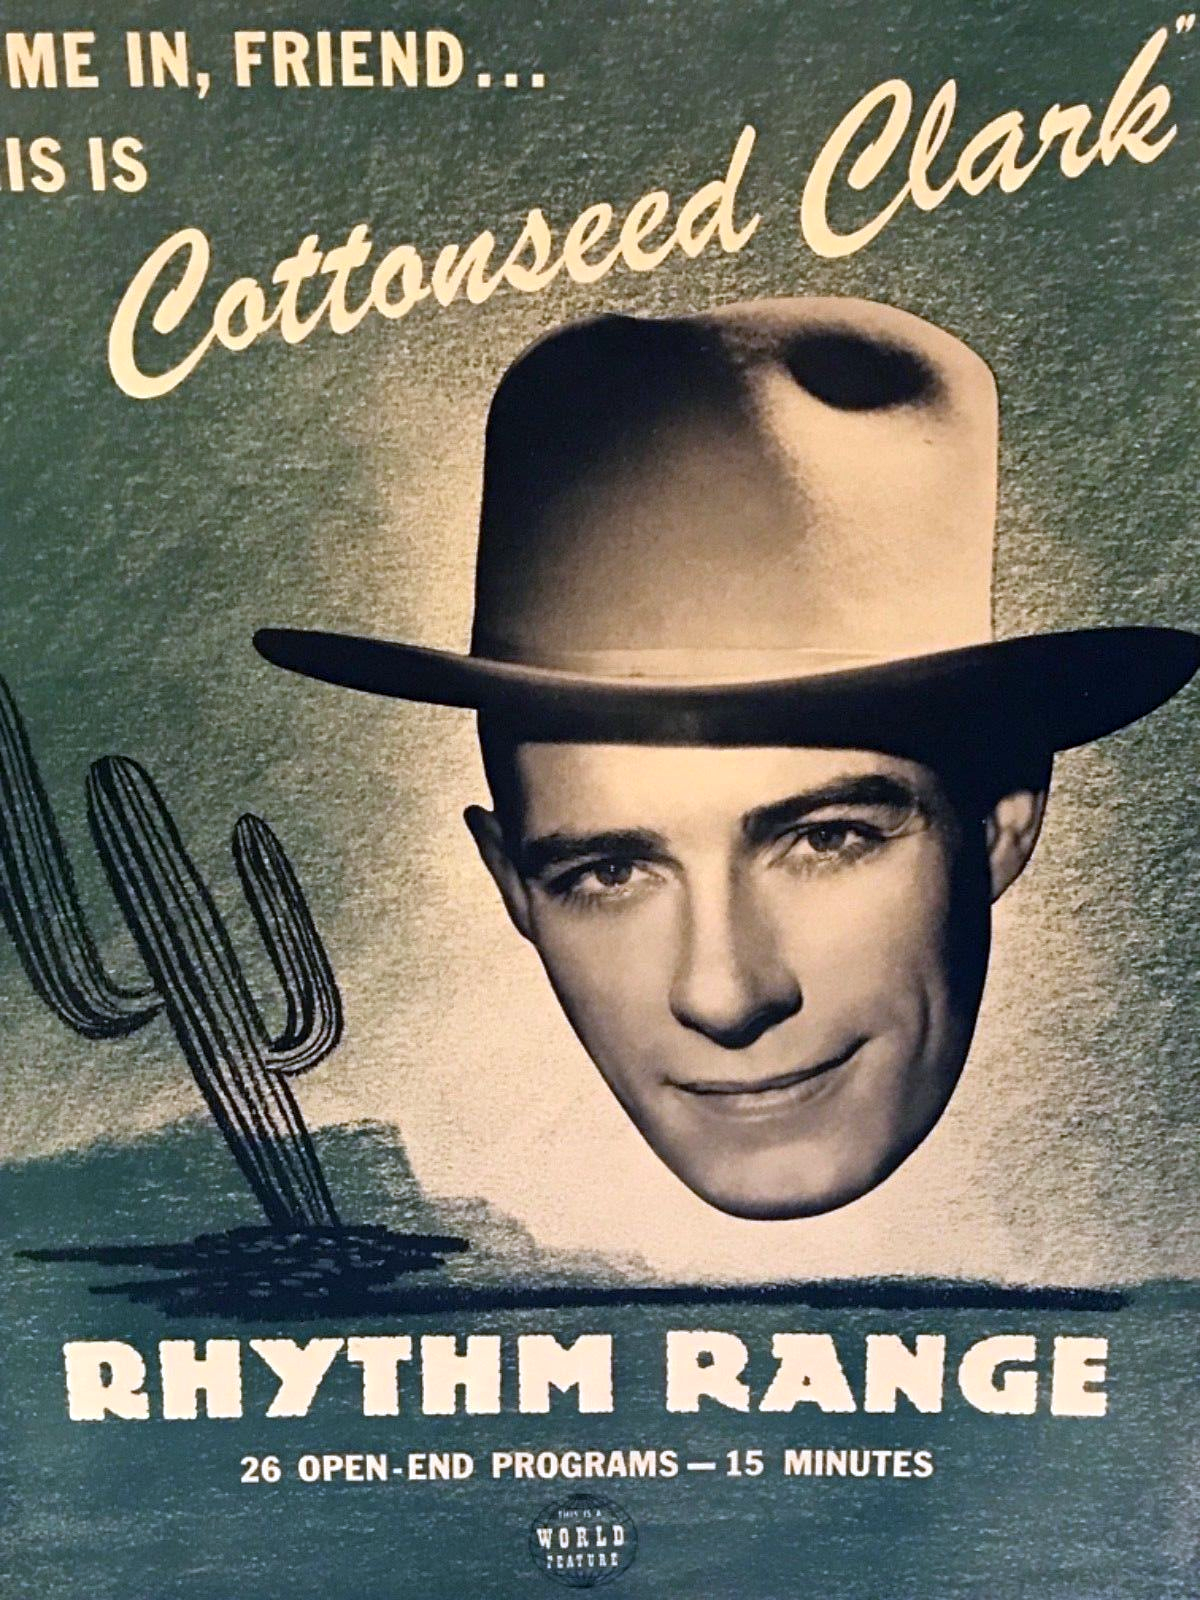 Cottonseed Clark - Rhythm Range Promo (Image)